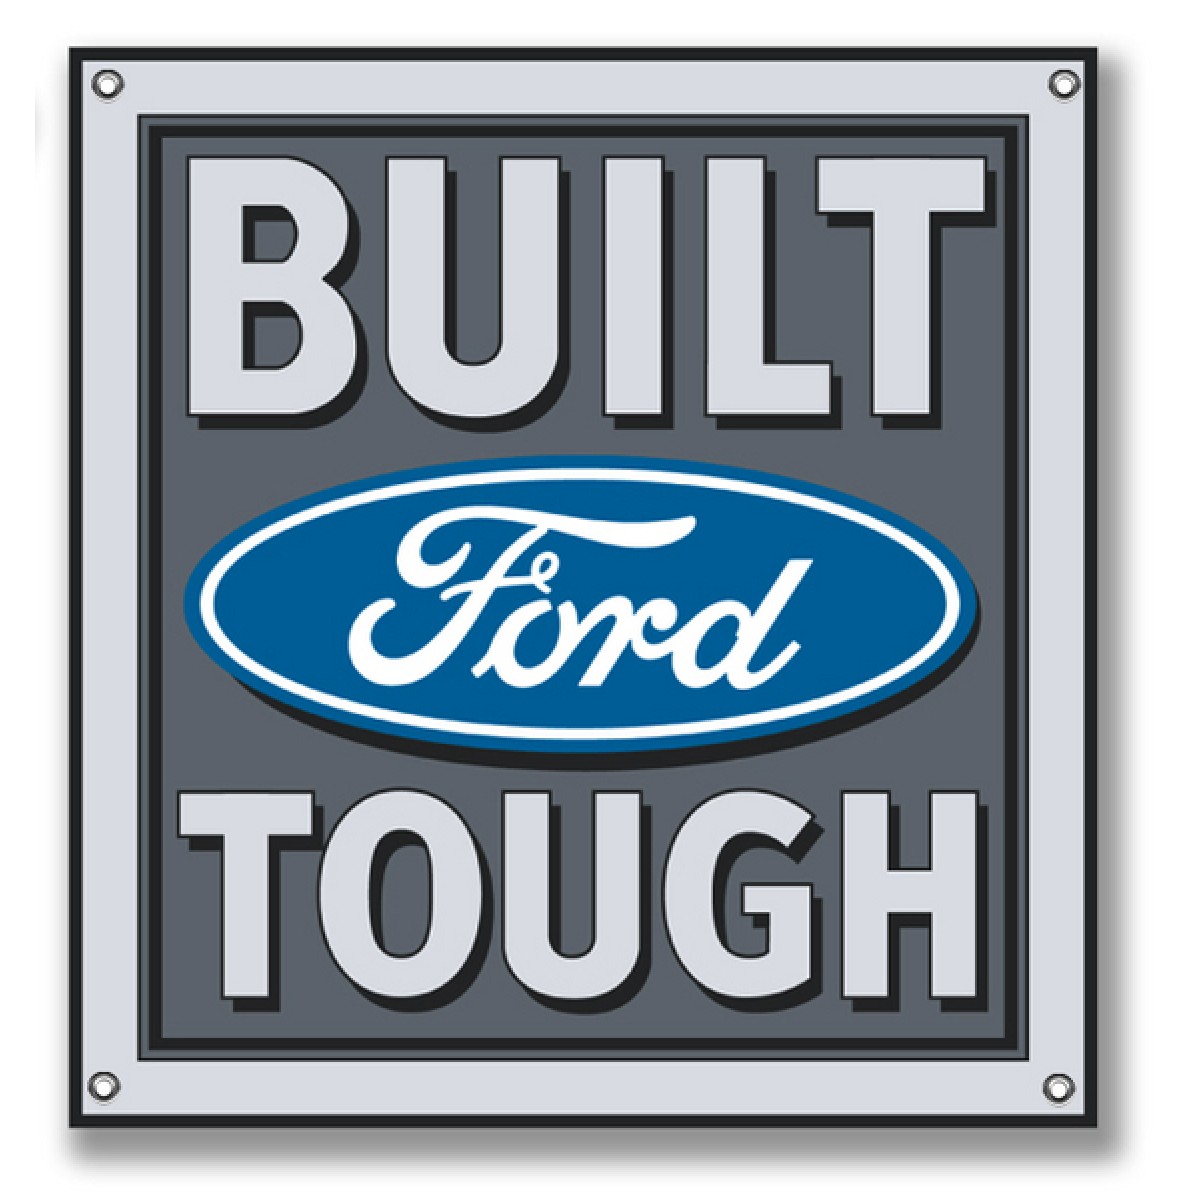 Built Ford Tough Logo - image #529